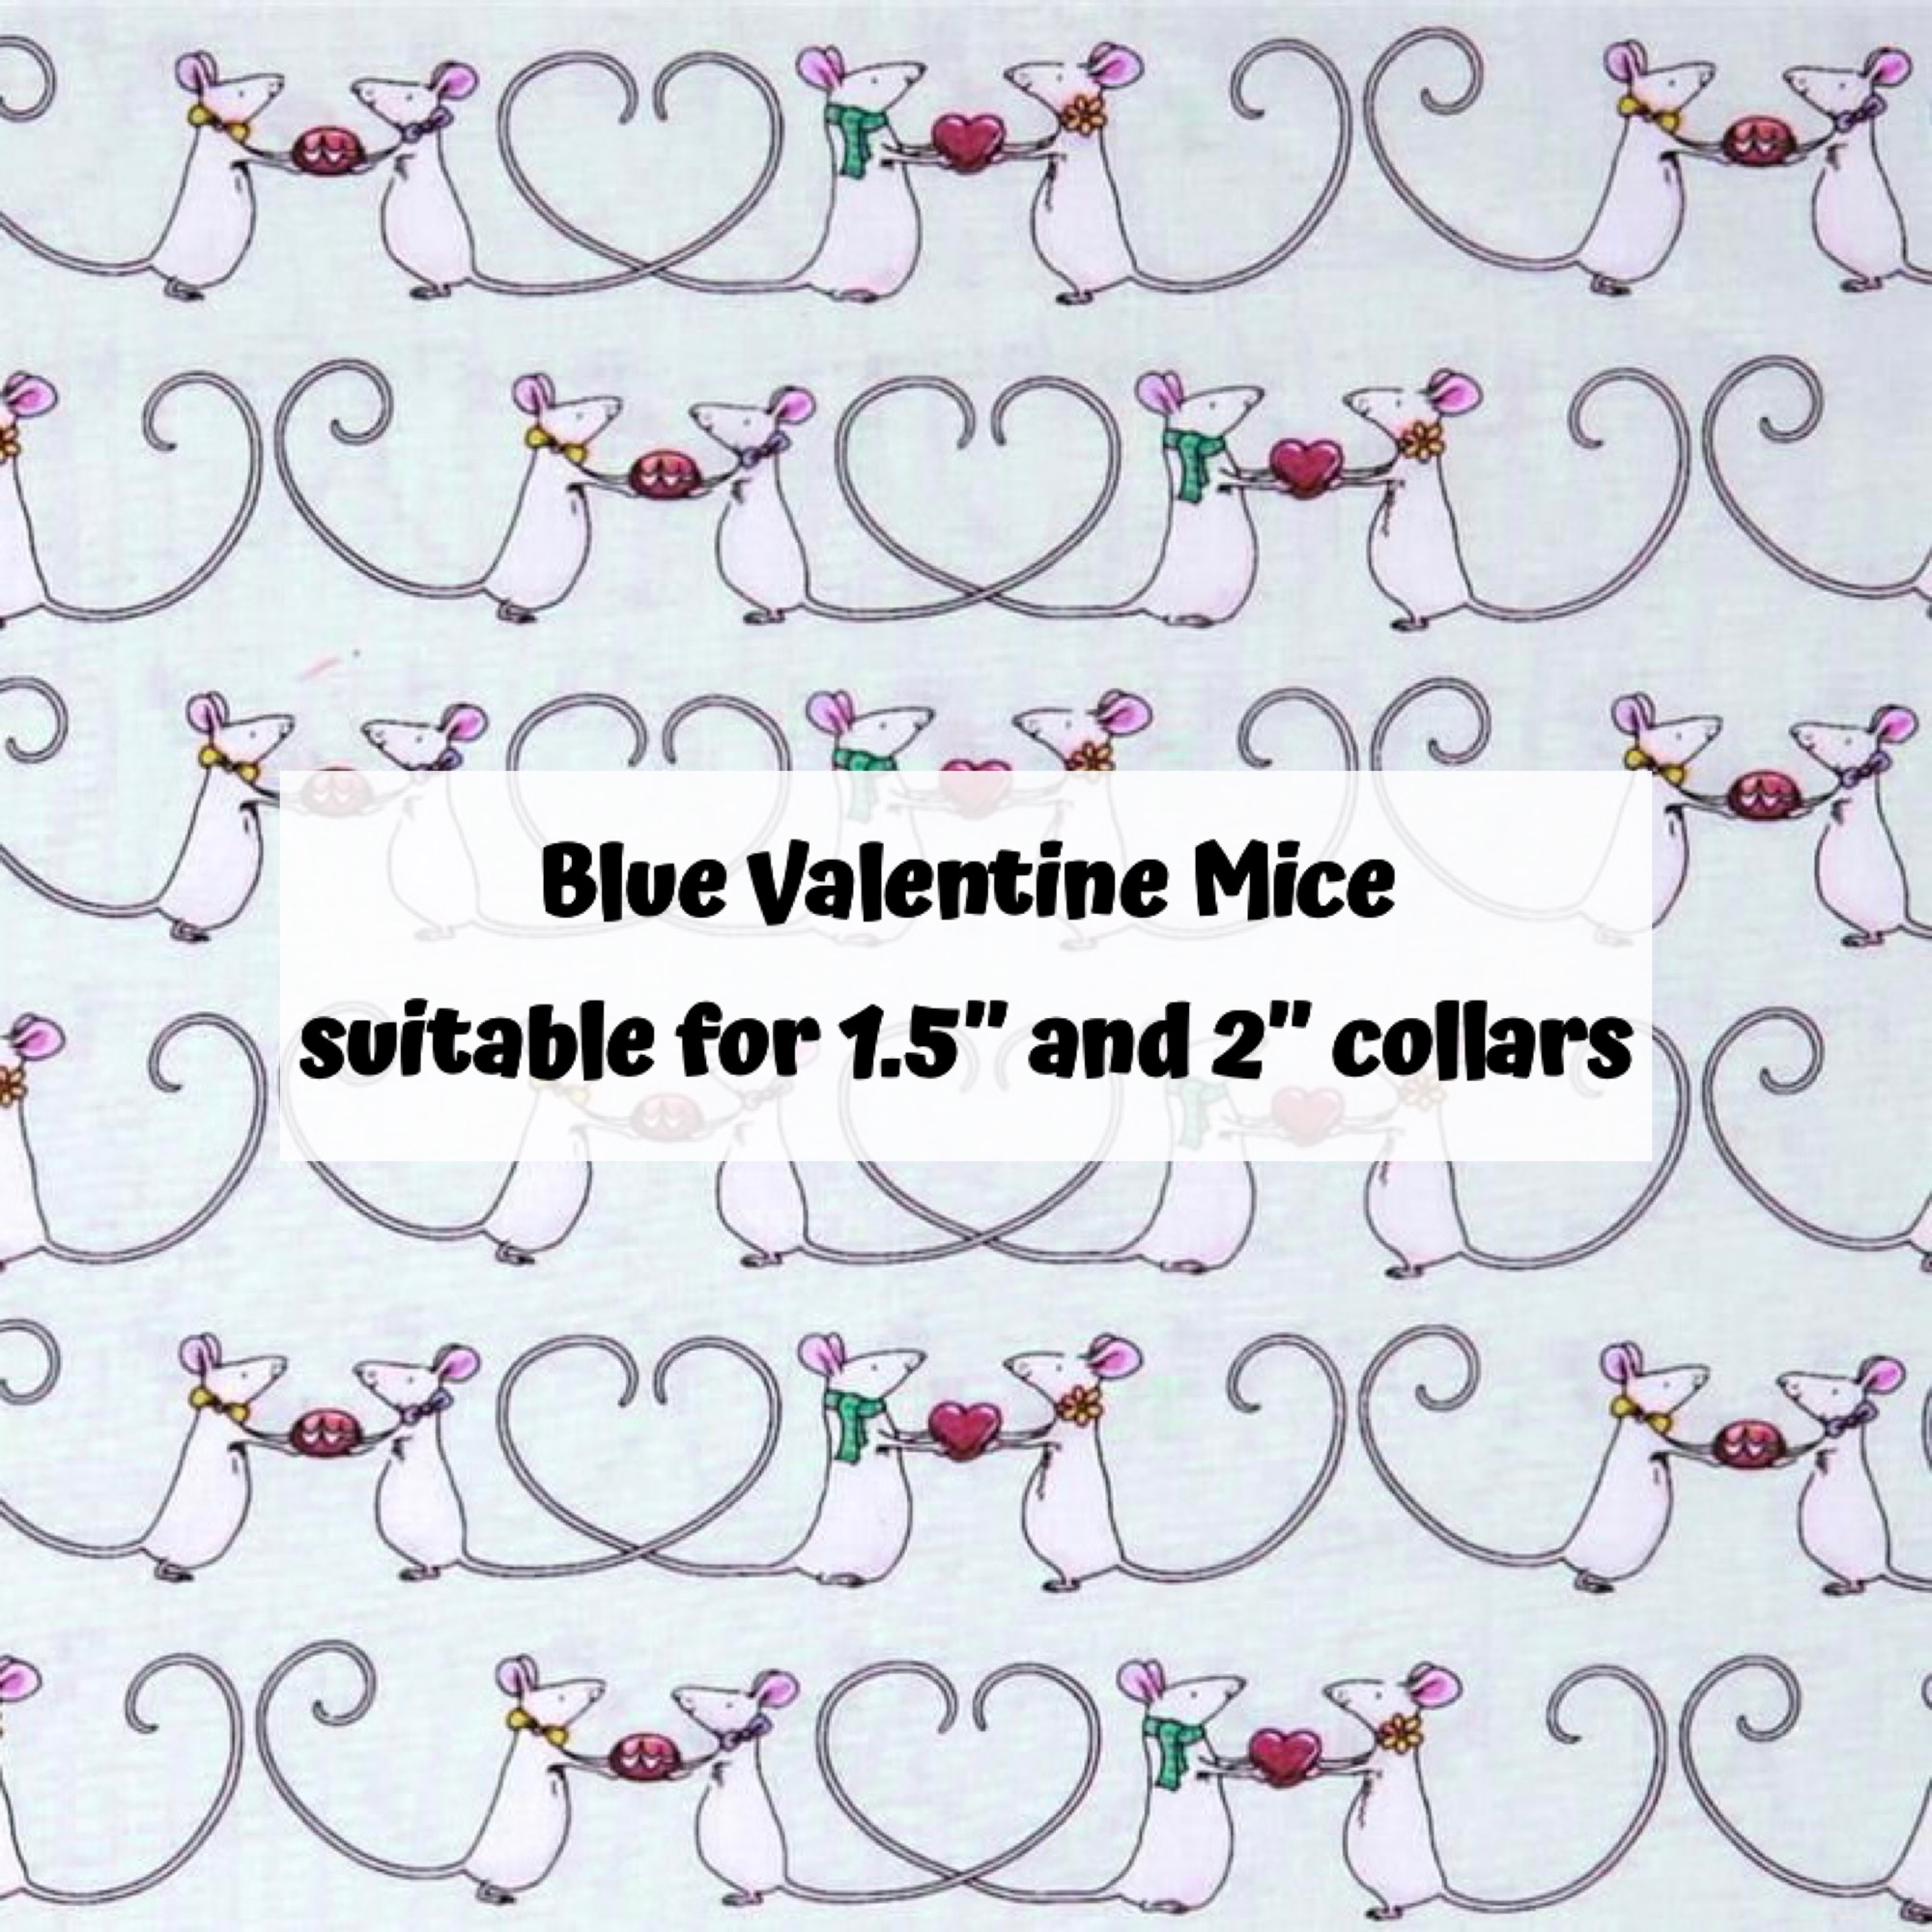 Blue Valentine Mice